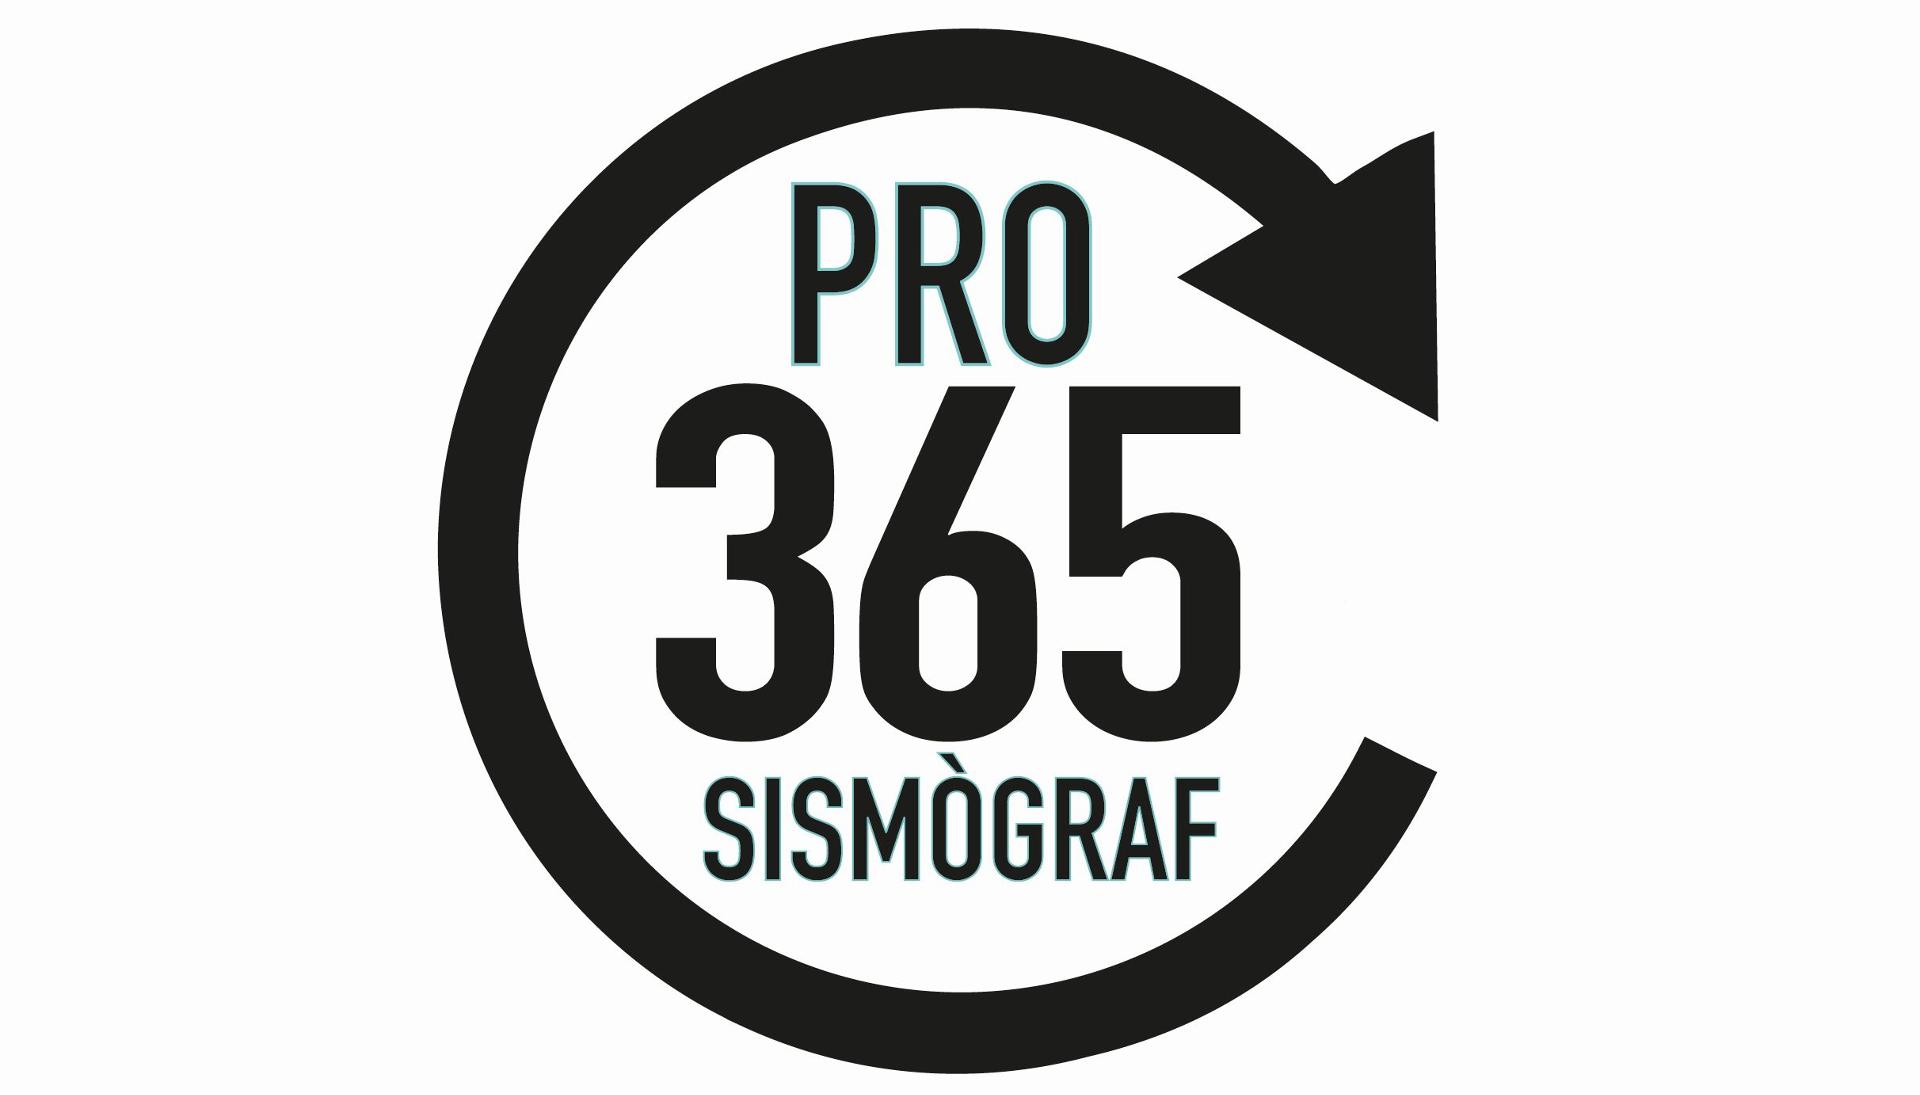 PRO 365